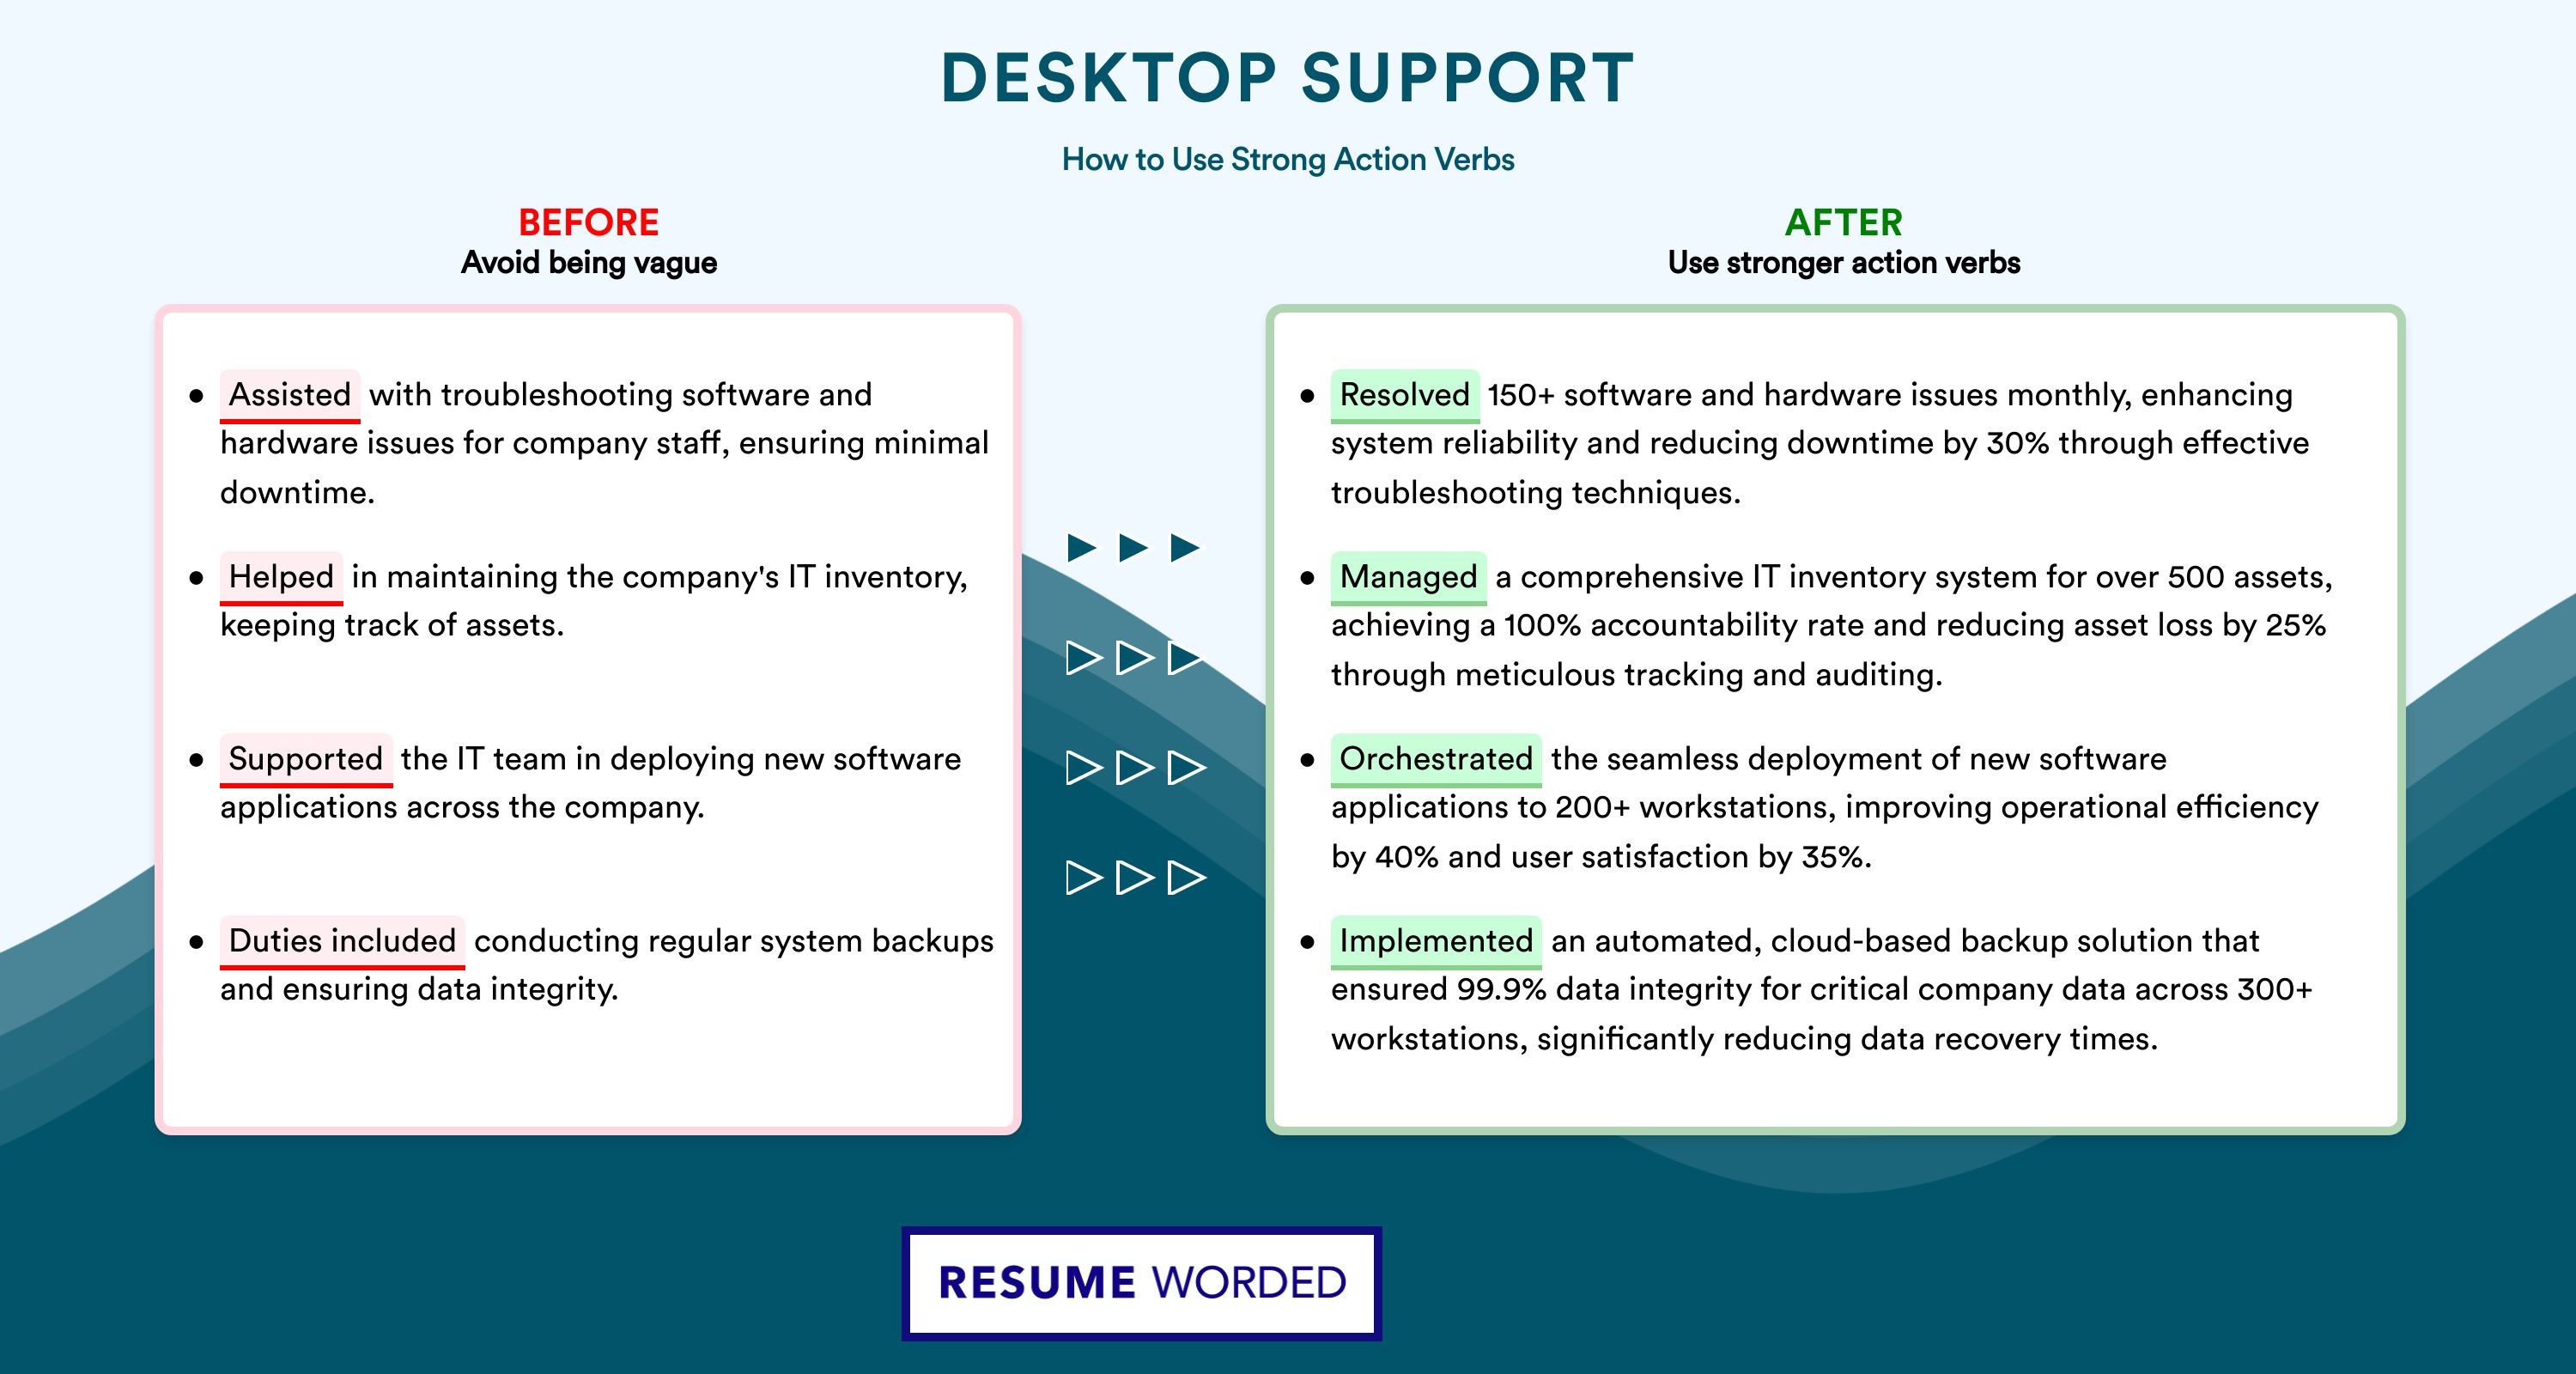 Action Verbs for Desktop Support